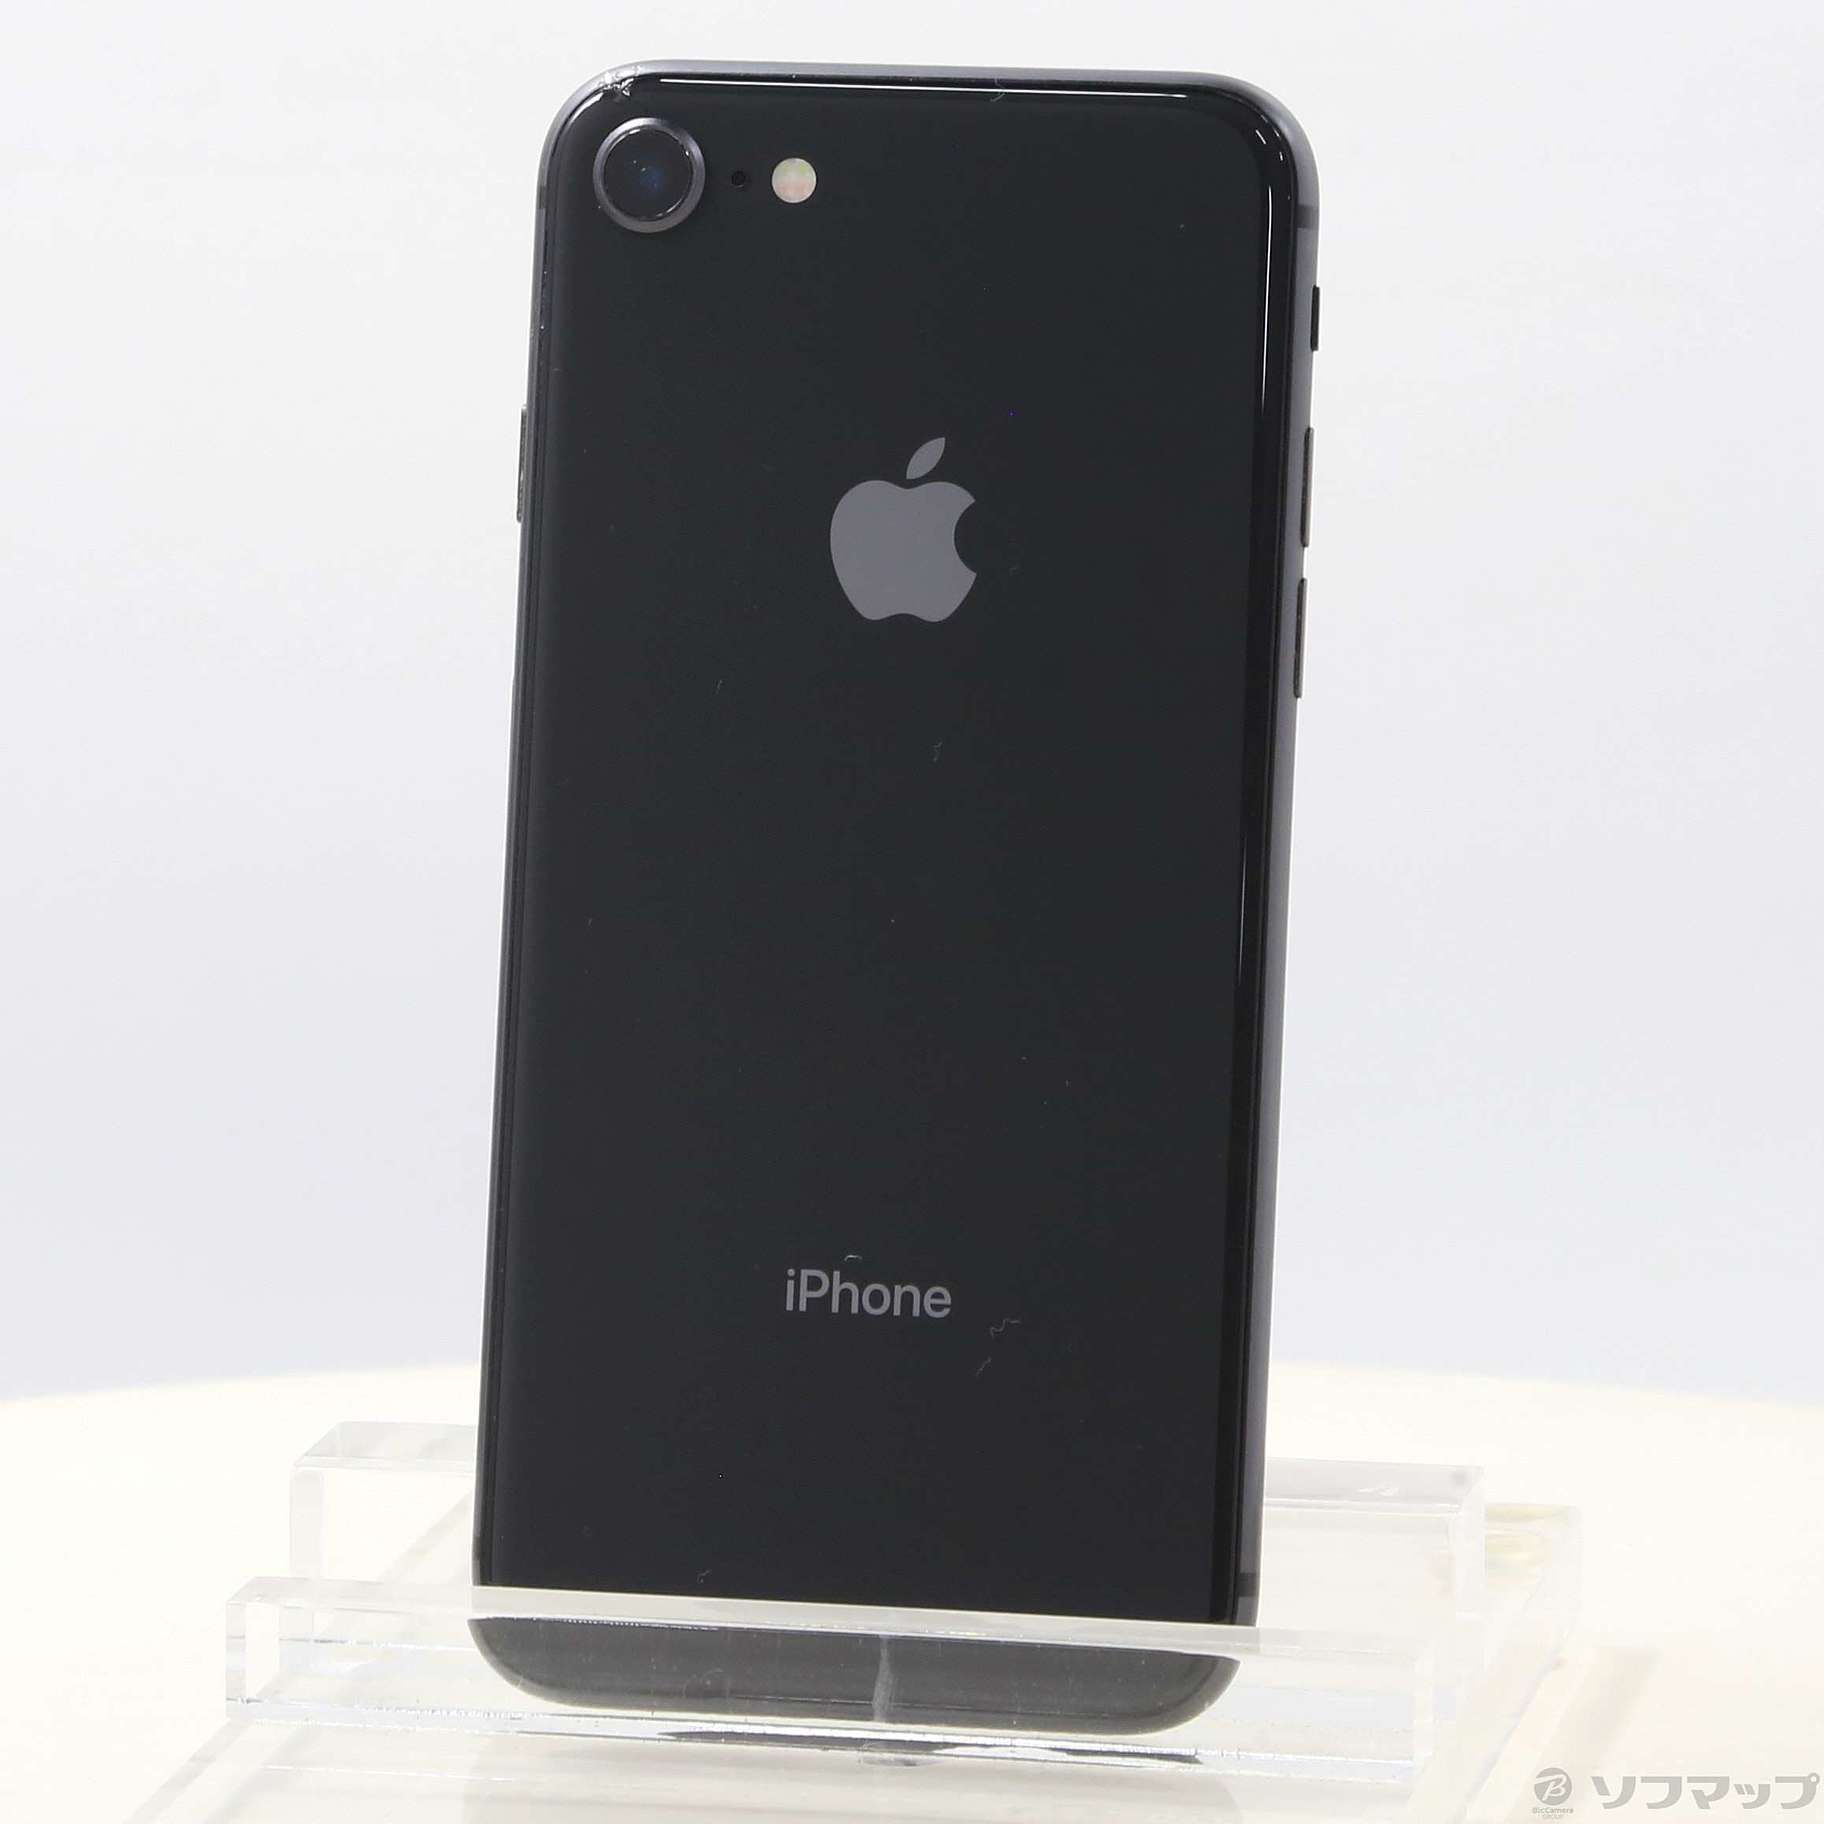 iPhone8 64GB スペースグレイスマートフォン/携帯電話